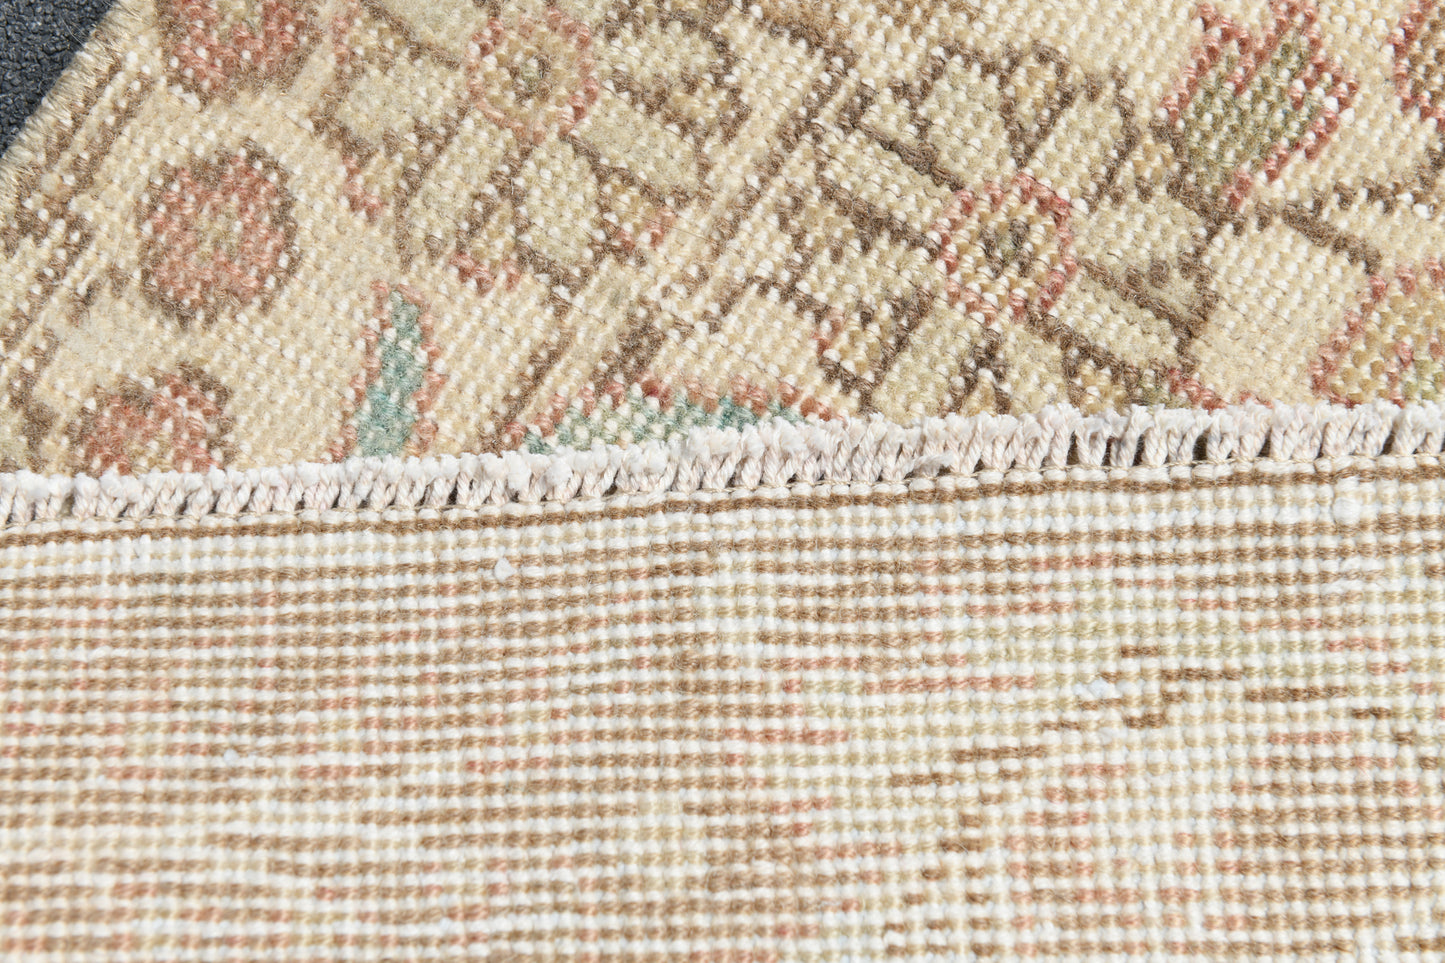 1'9" x 4'12" Vintage Persian Rug - 17938